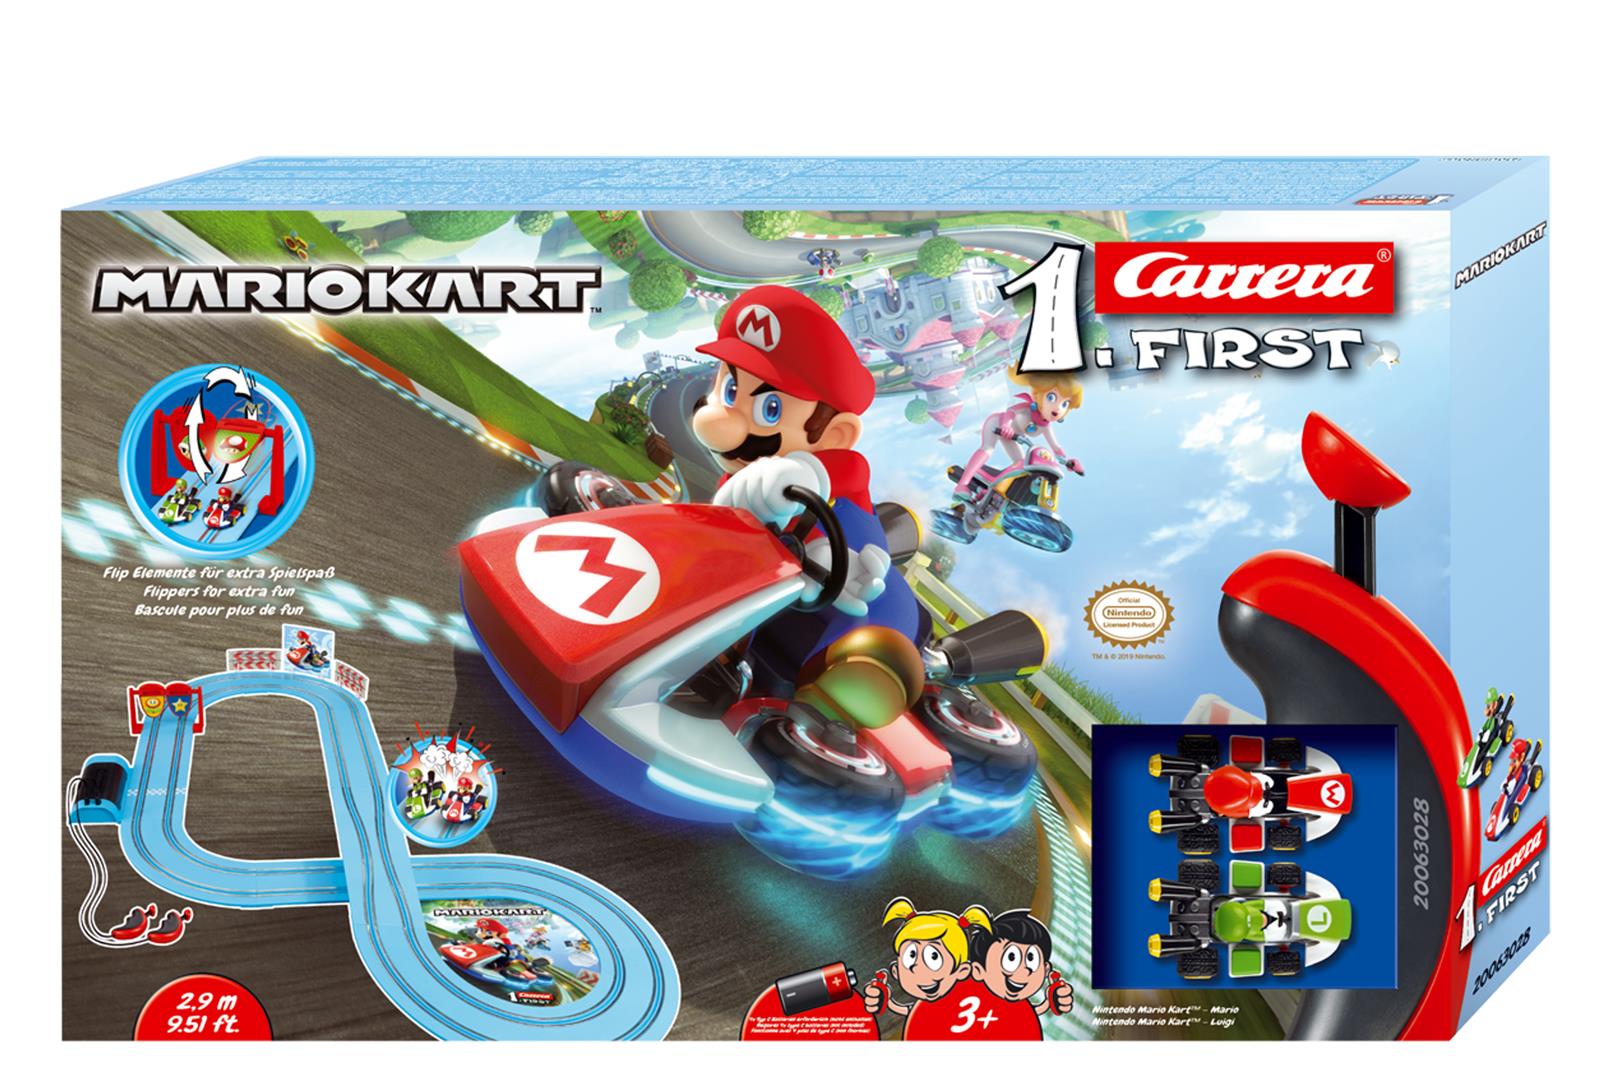 Carrera First Nintendo Mario